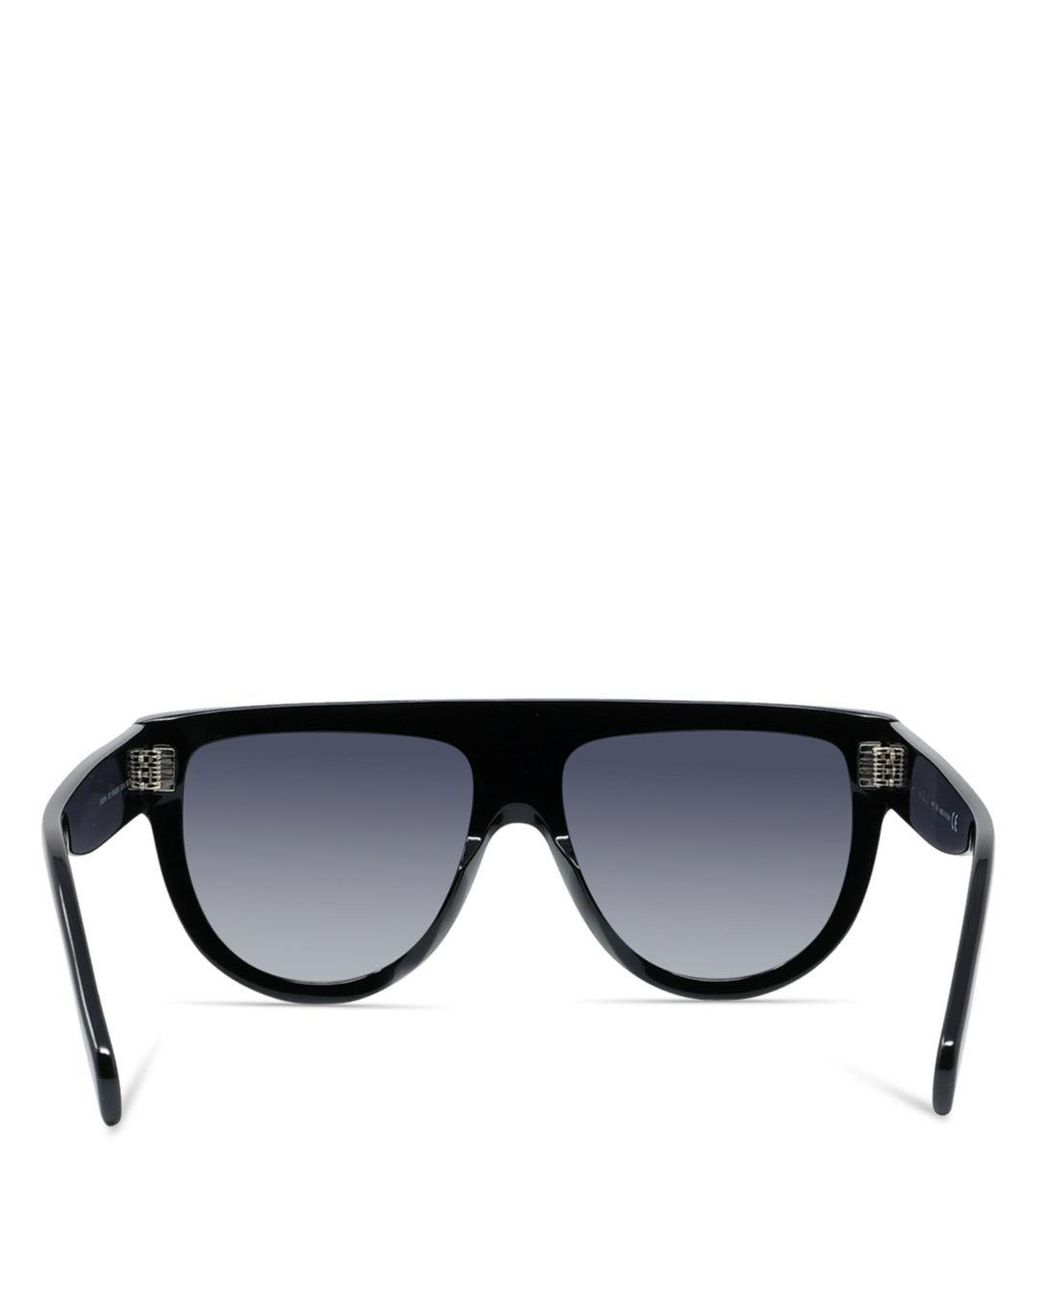 Celine Polarized Flat Top Aviator Sunglasses in Black | Lyst